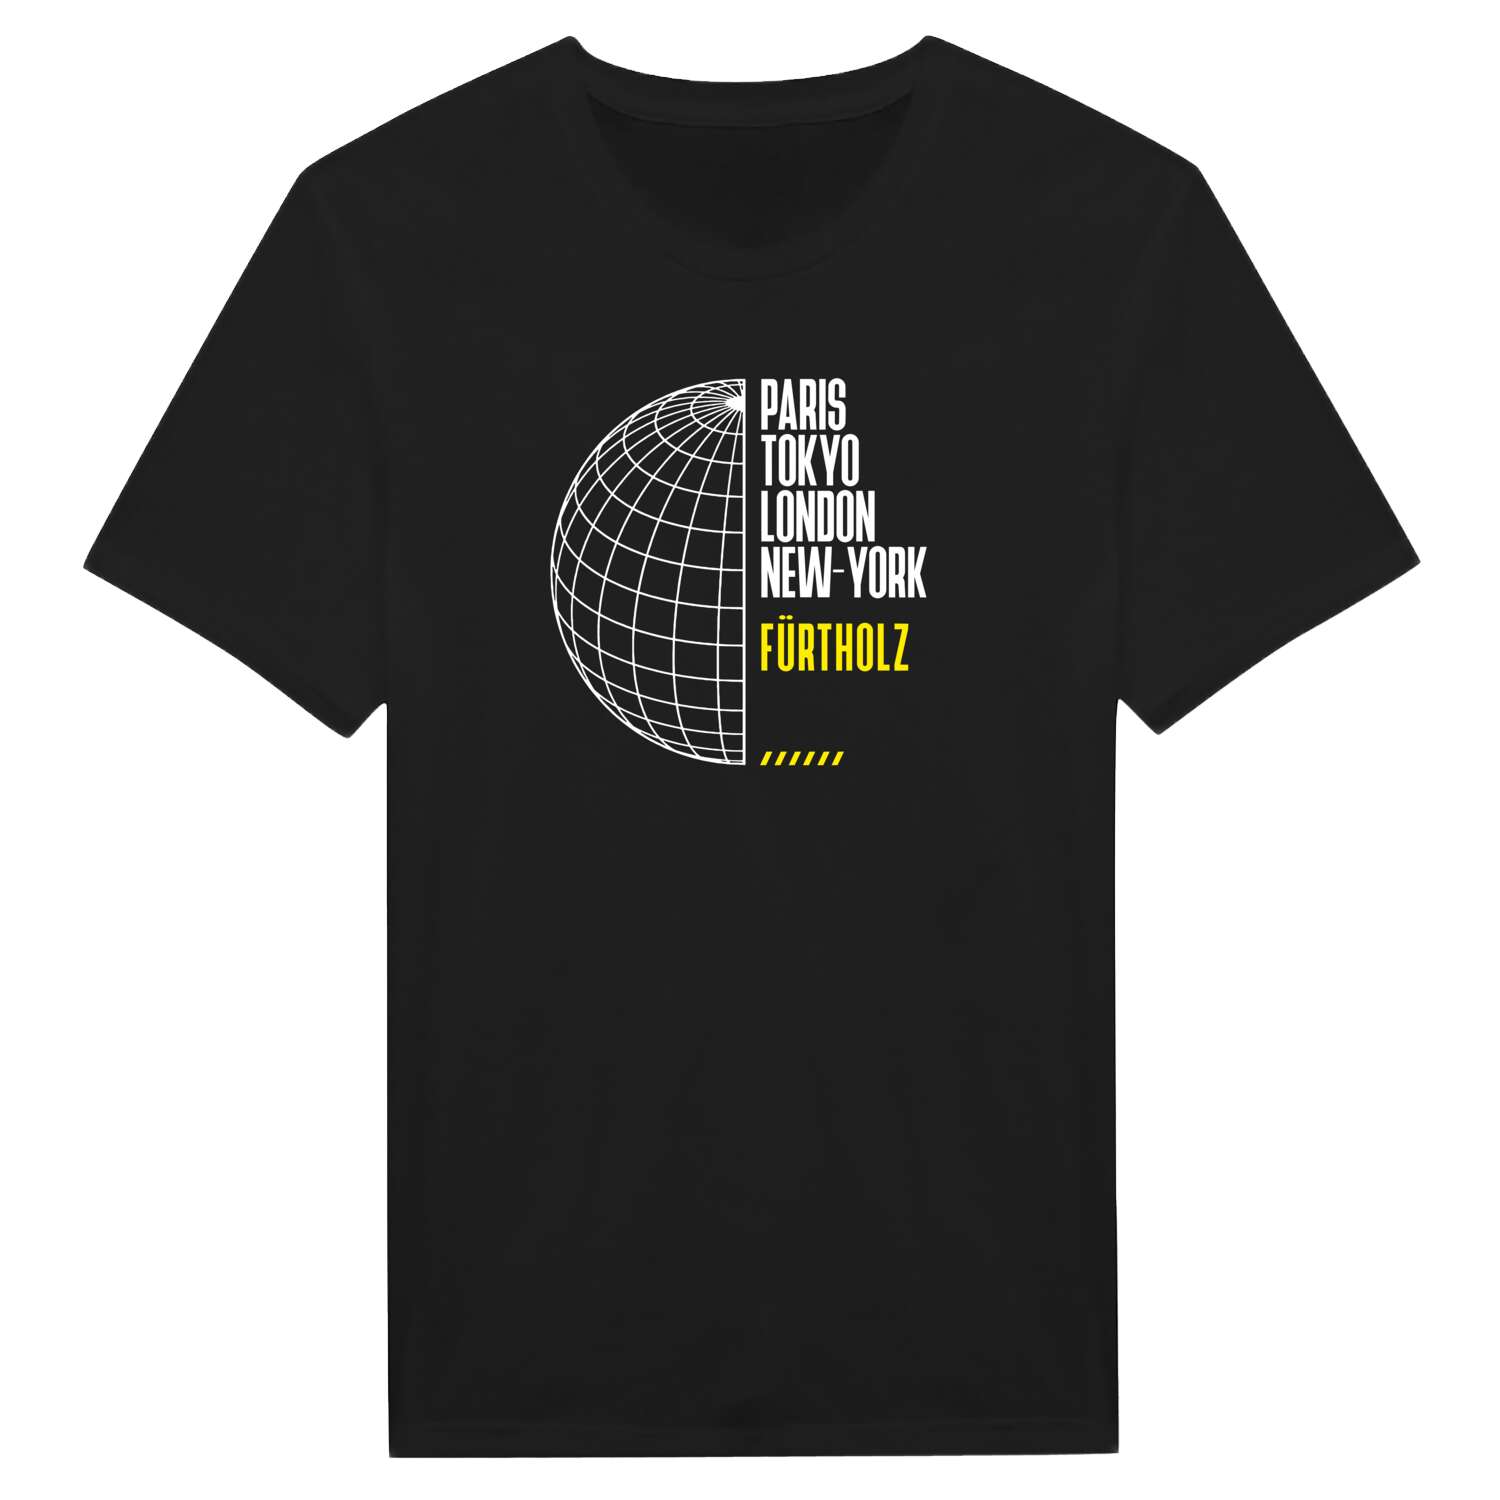 Fürtholz T-Shirt »Paris Tokyo London«